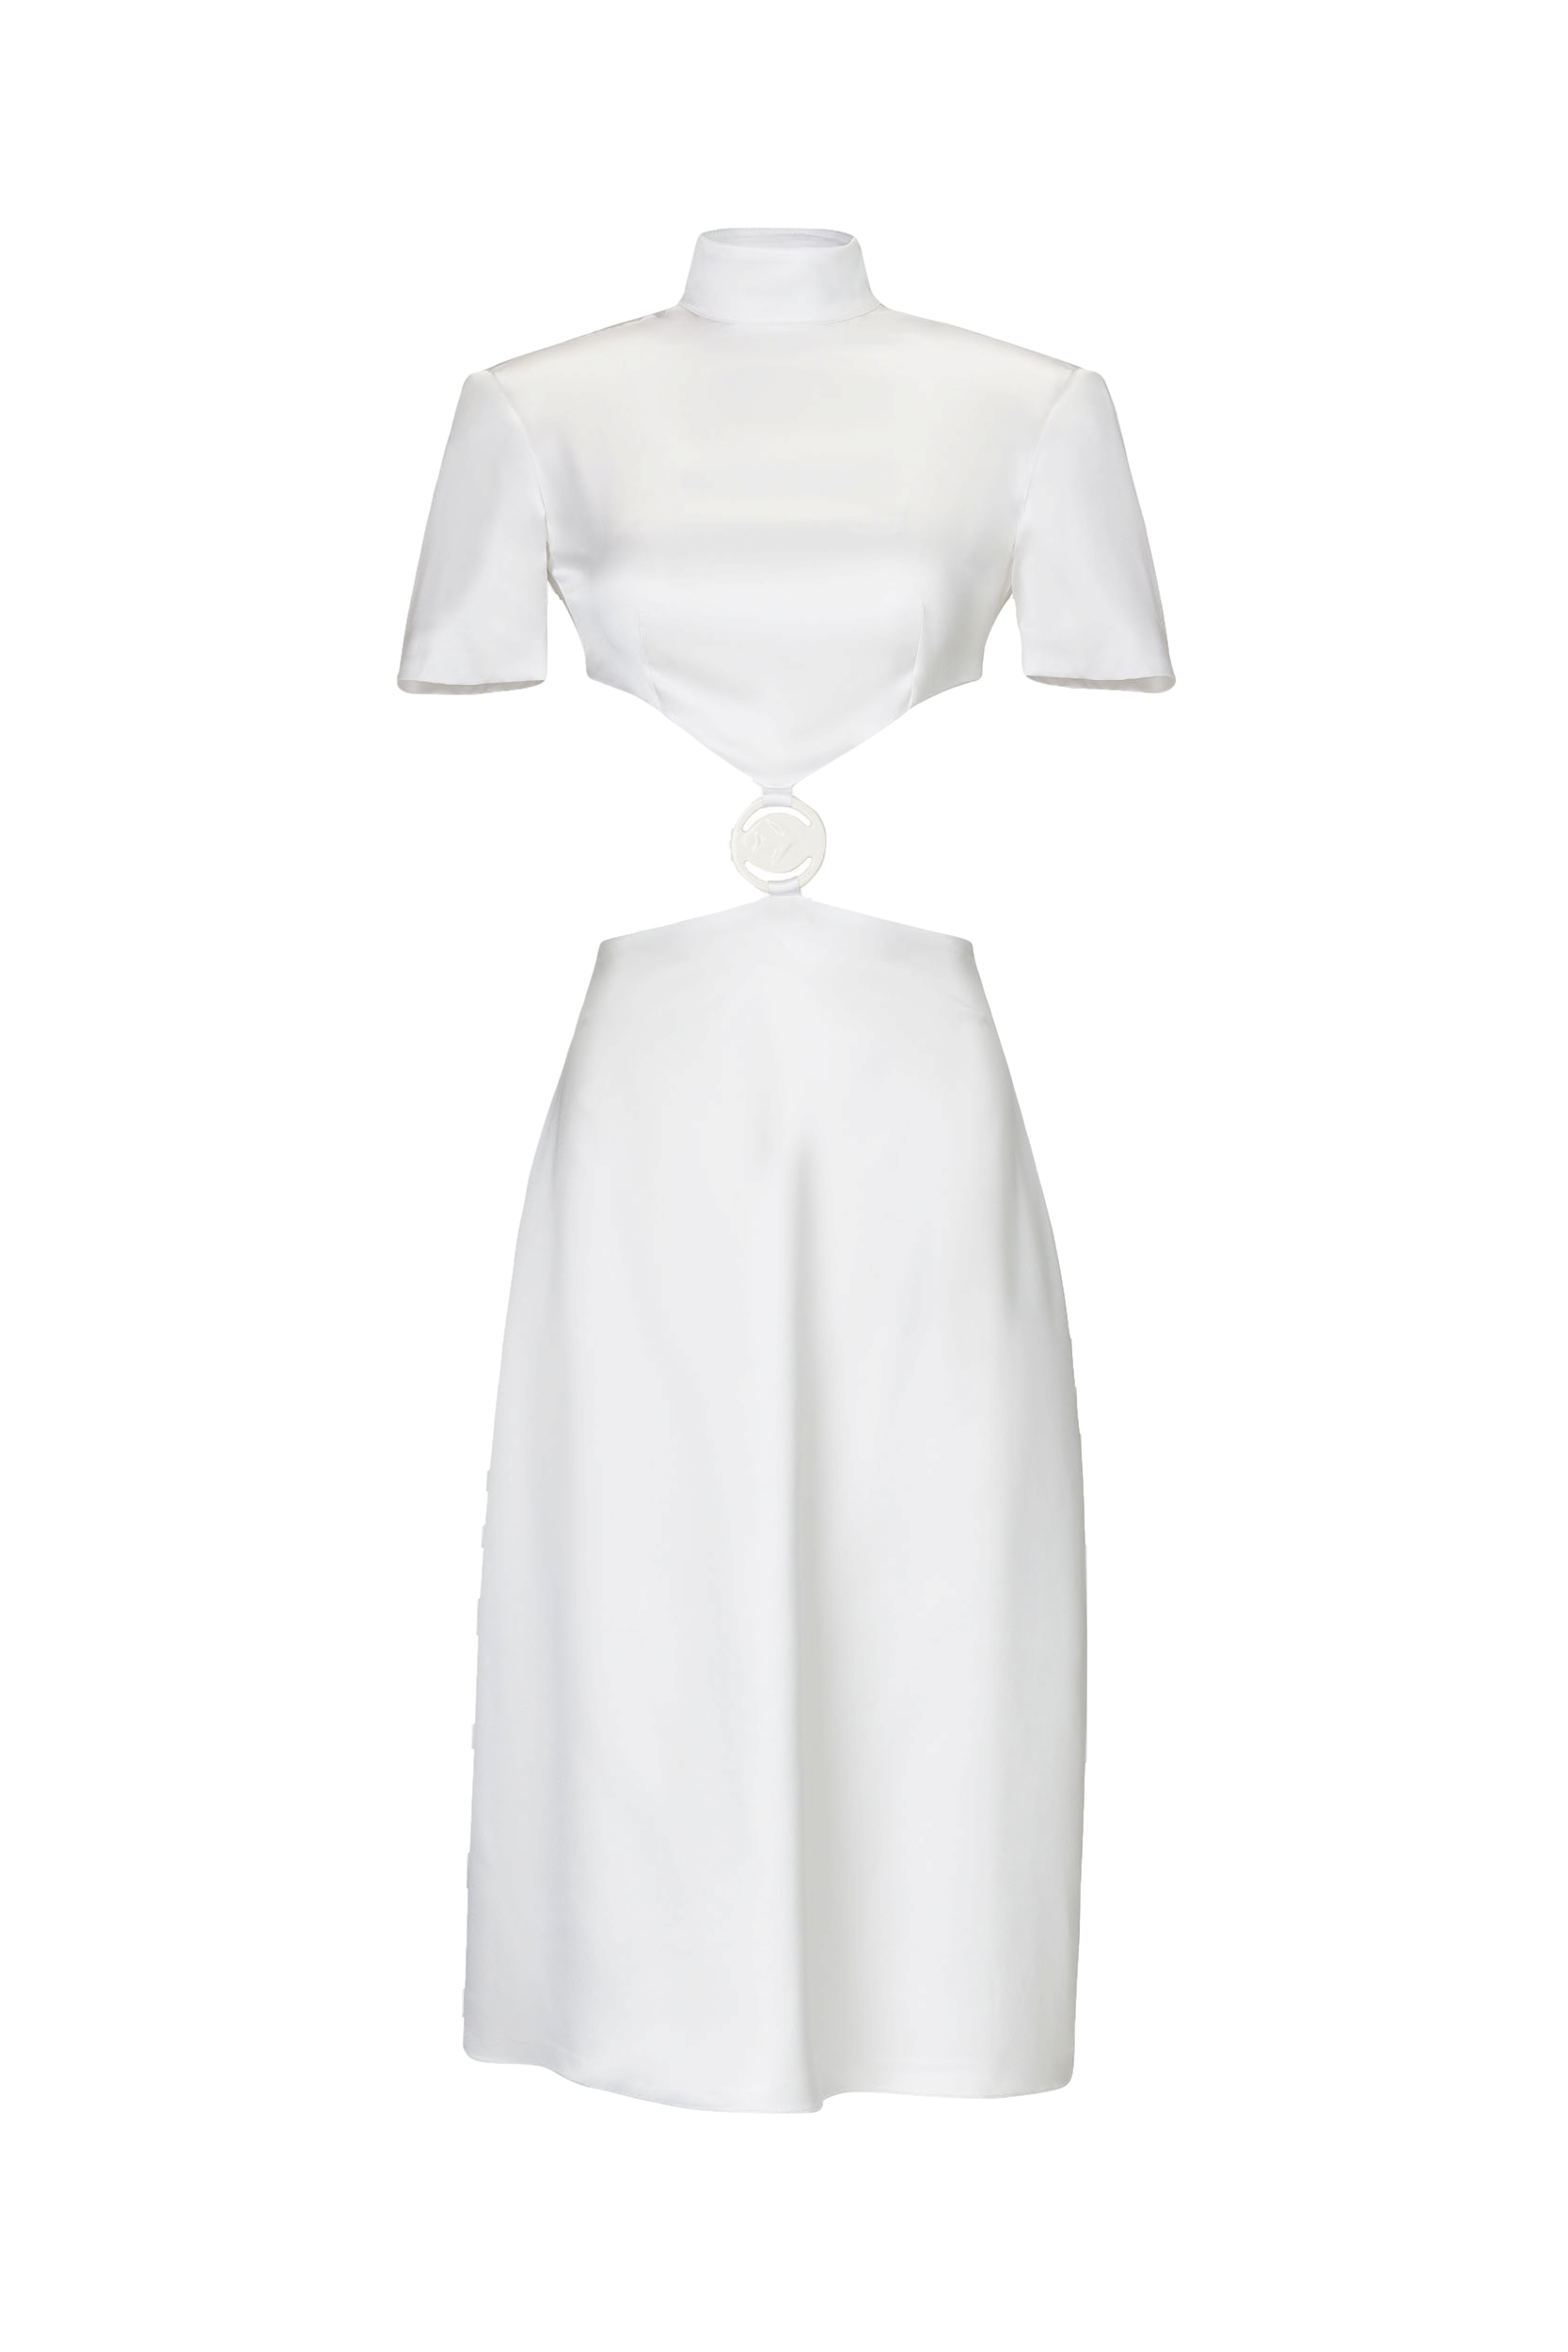 Vol Paloma Blanca Silk Dress In White